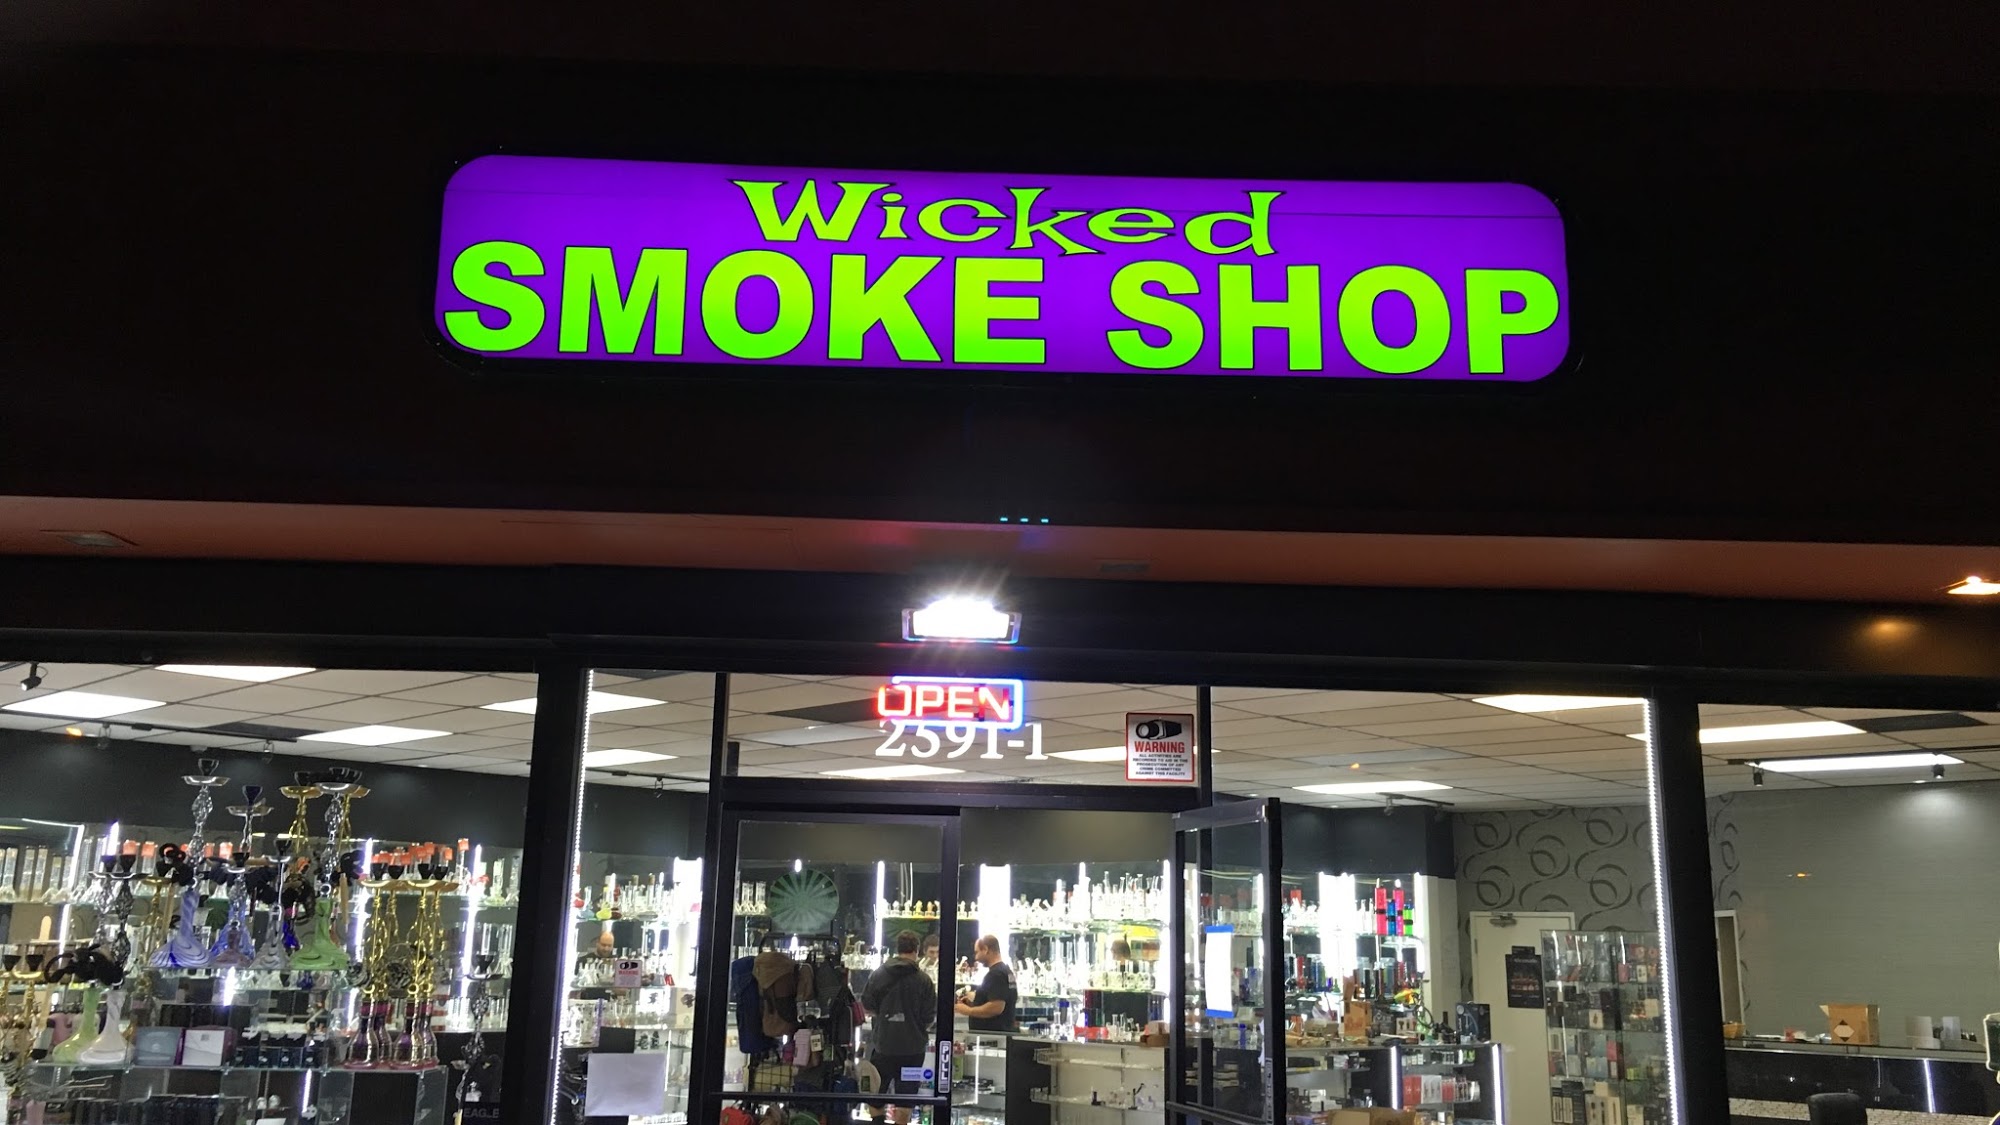 Wicked smoke shop & Vape